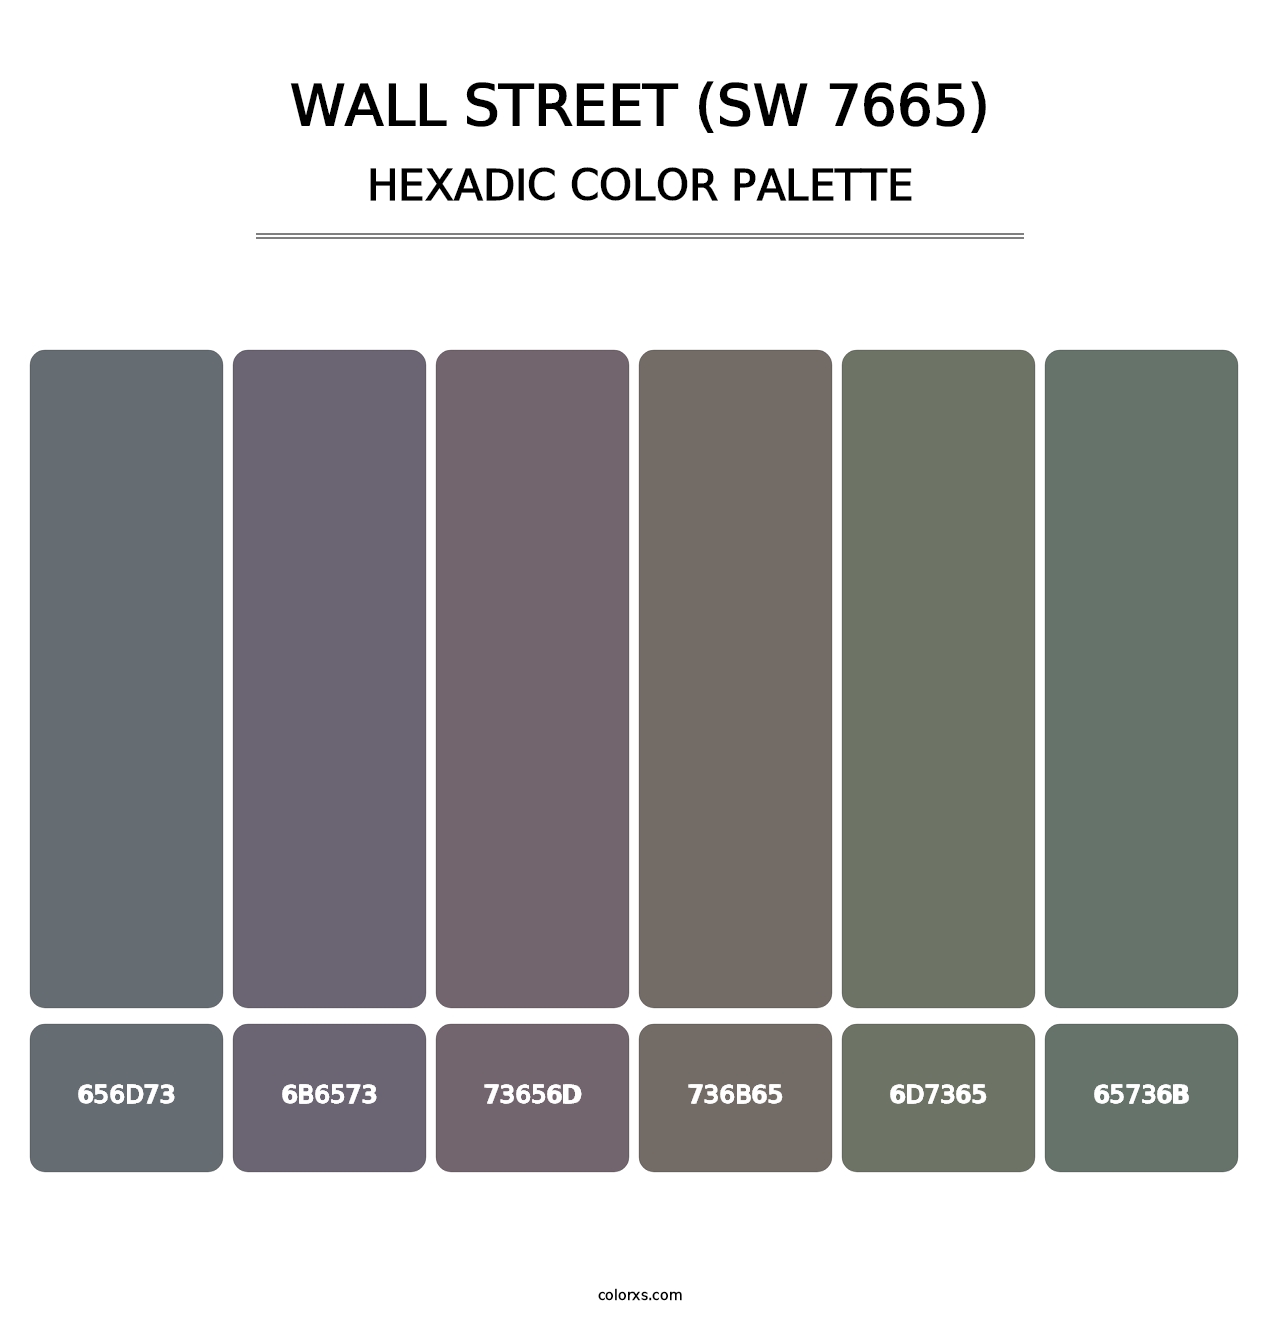 Wall Street (SW 7665) - Hexadic Color Palette